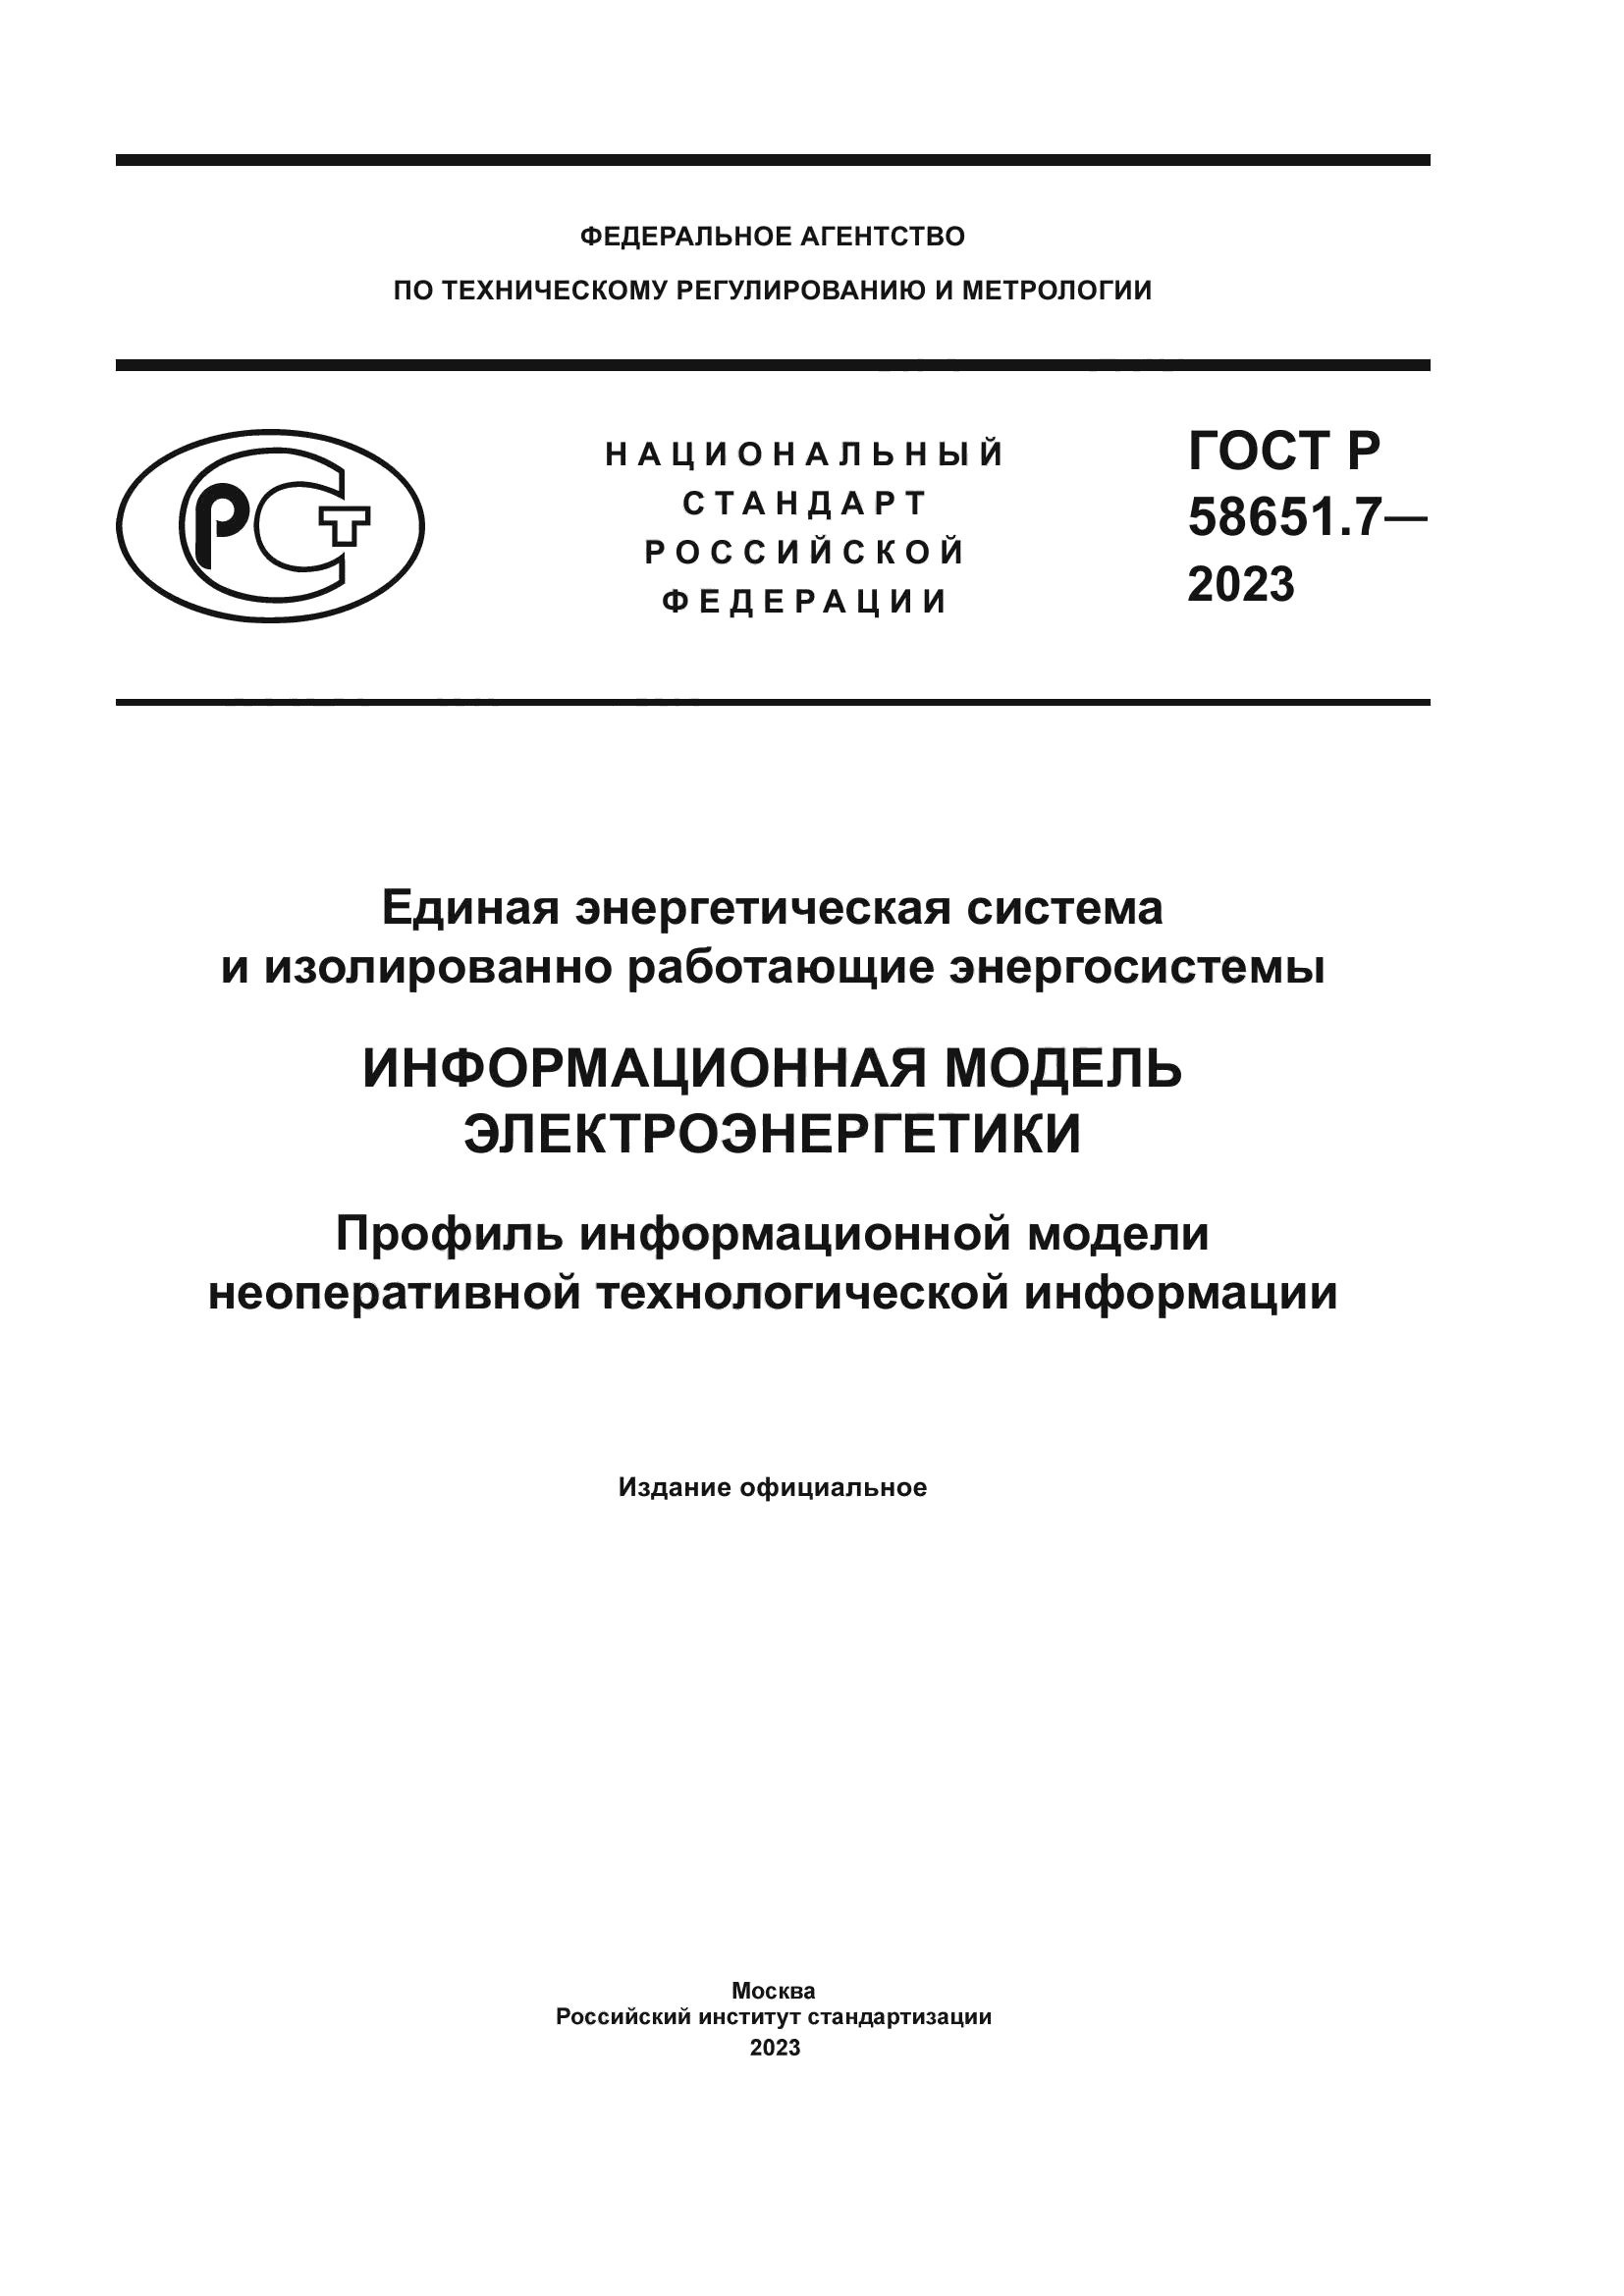 ГОСТ Р 58651.7-2023